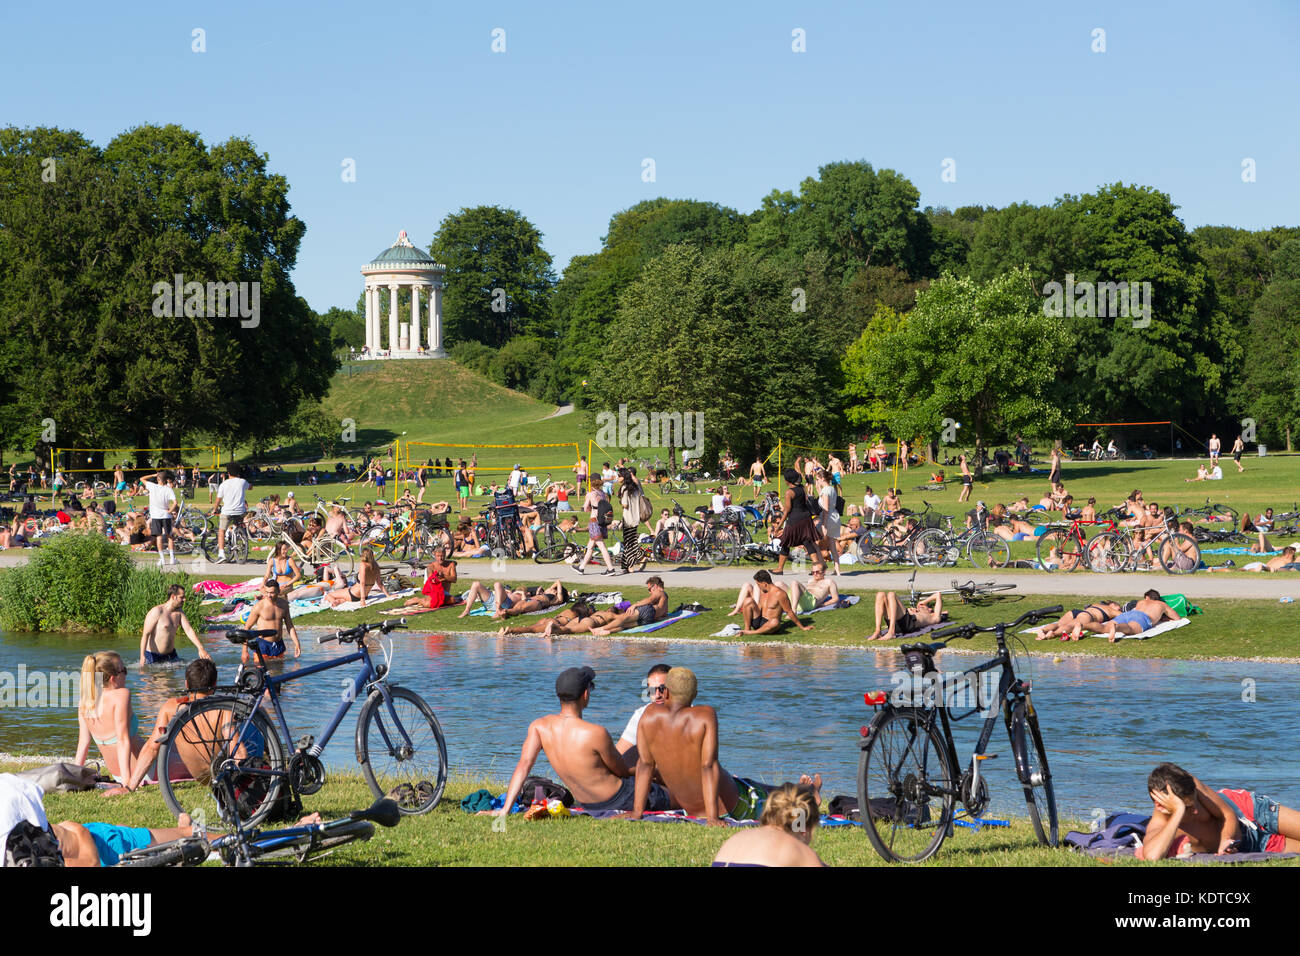 People enjoying the summer day in Englischer Garten city park in Munich, Germany. Stock Photo